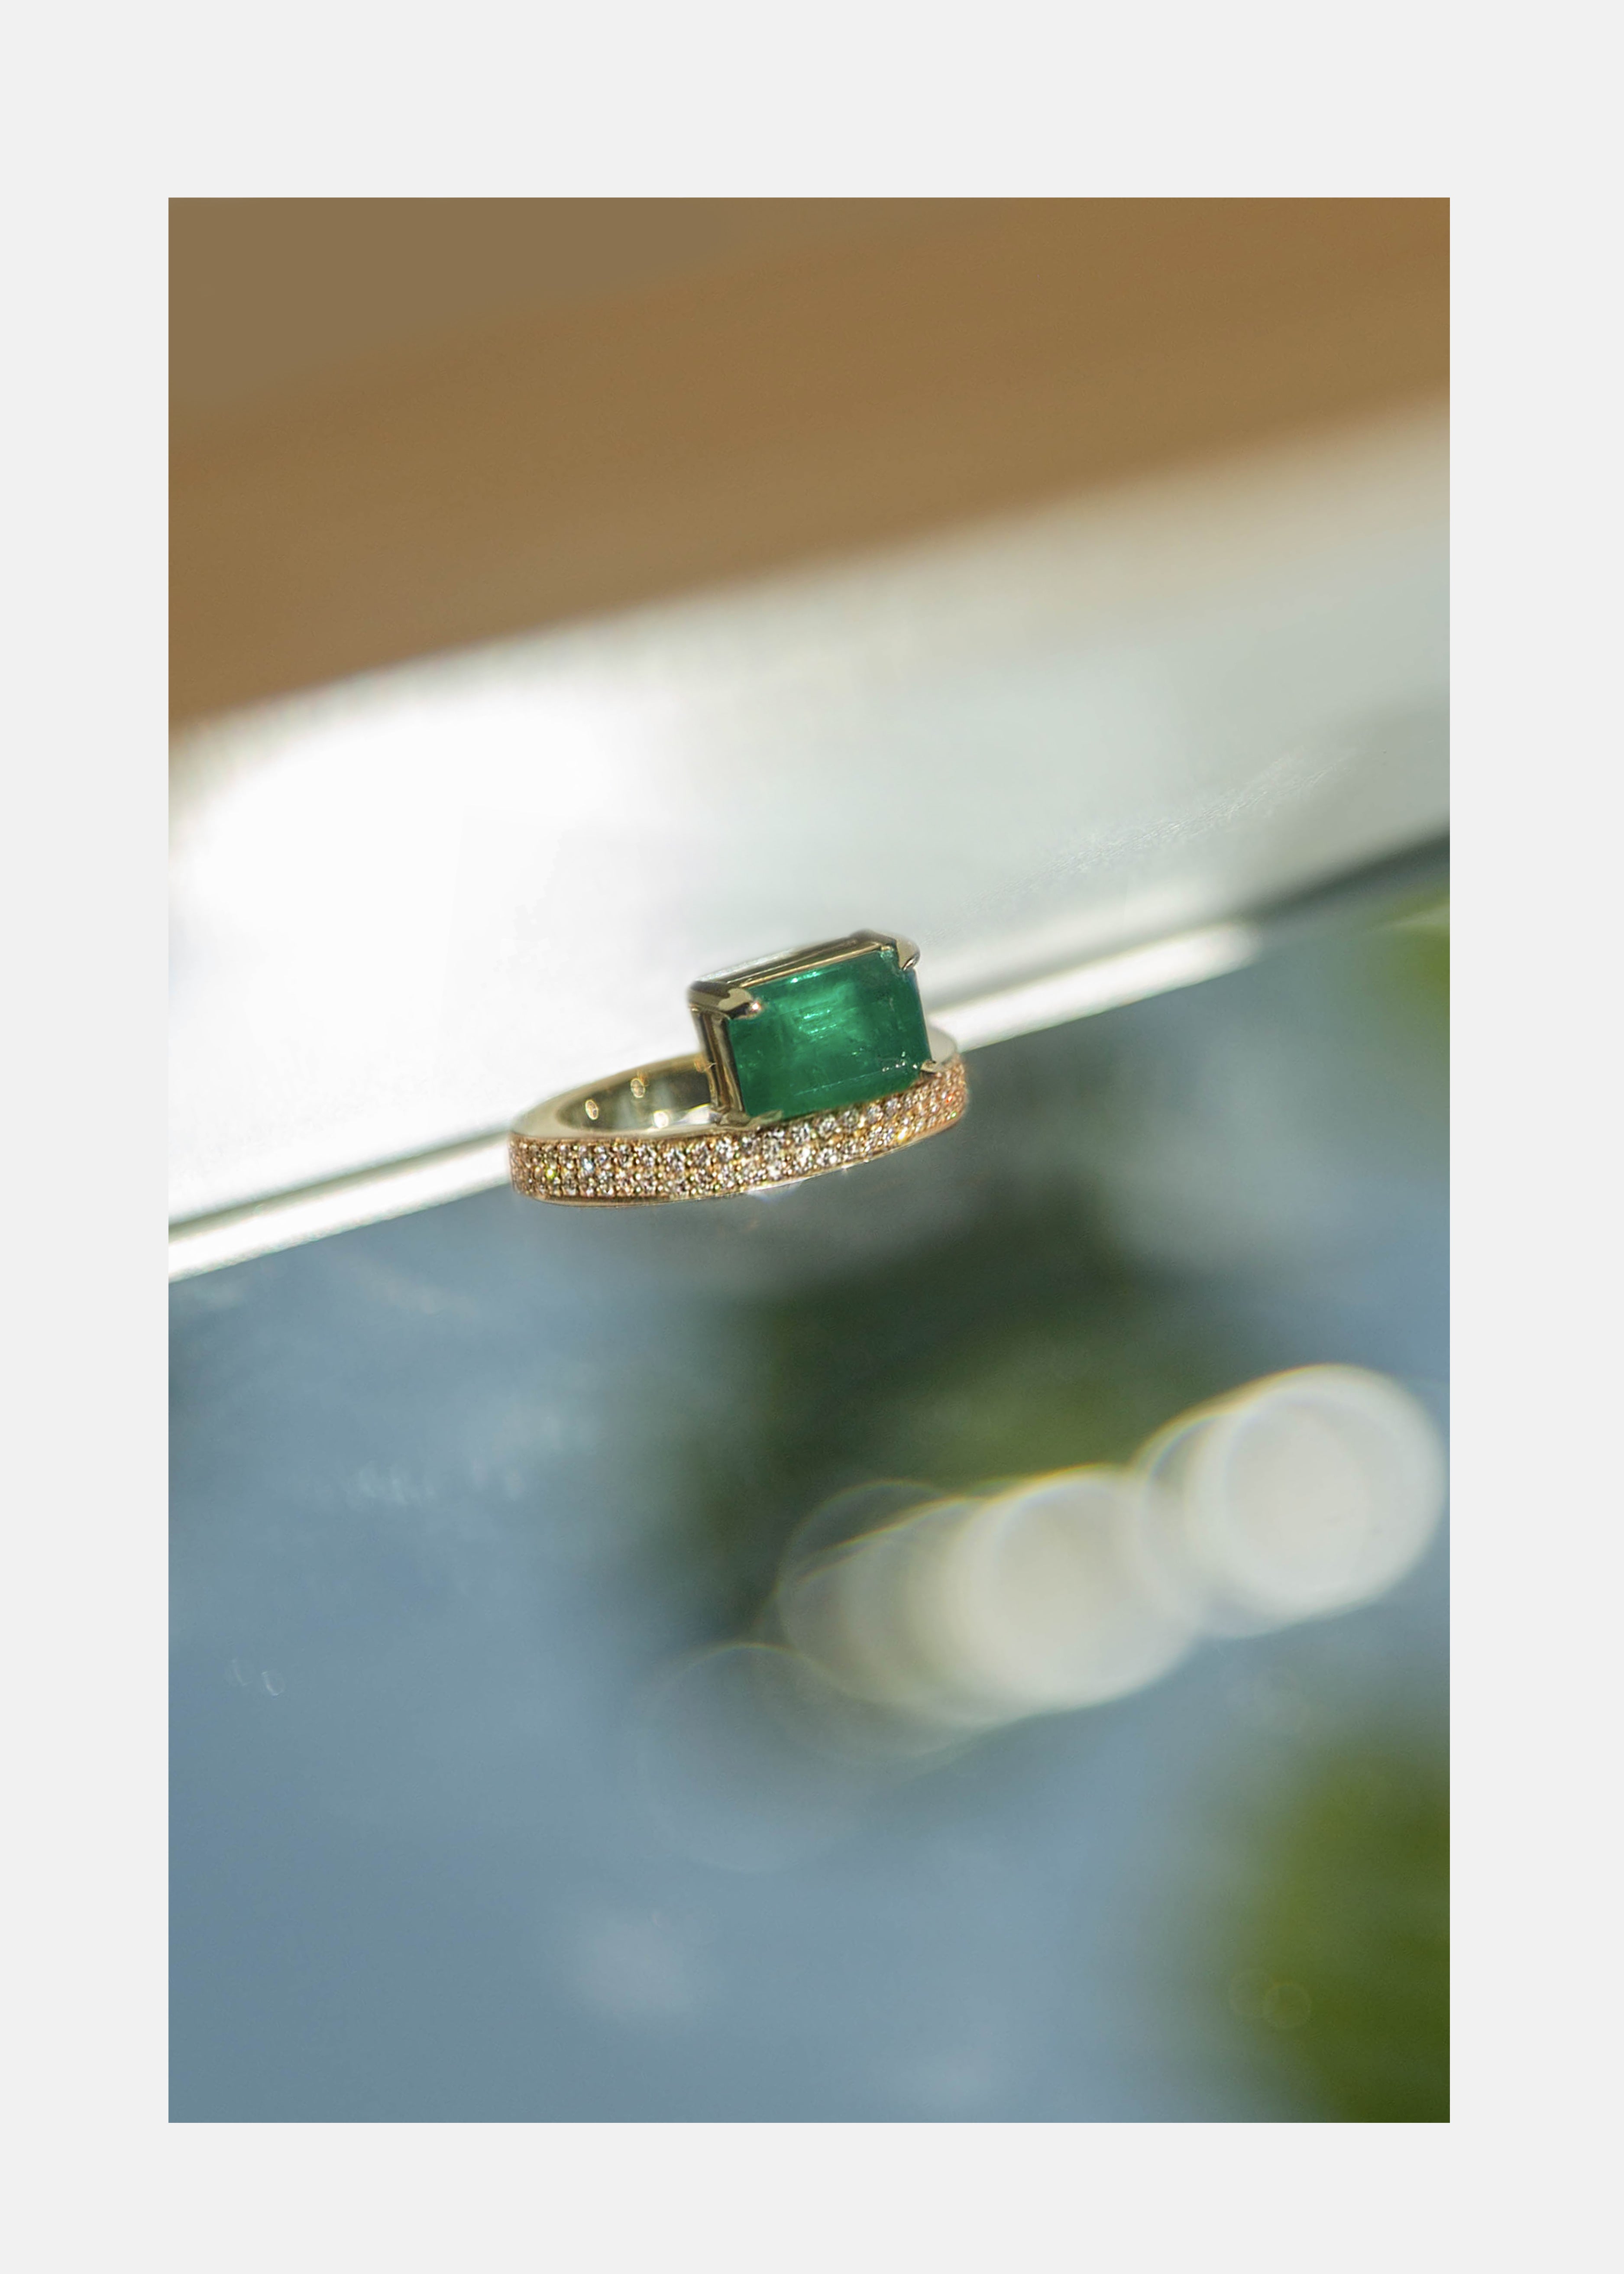 Buy Gemstone Industry Attractive Emerald Stone Ring Original Certtified  Panna Ratna Ki Anguthi Premium Pachu Stone Ring For Men Green Emerald  Markatham Ring Emerald Shape Rashi Ratnपन्ना रत्न ओरिजिनल रिंग at Amazon.in